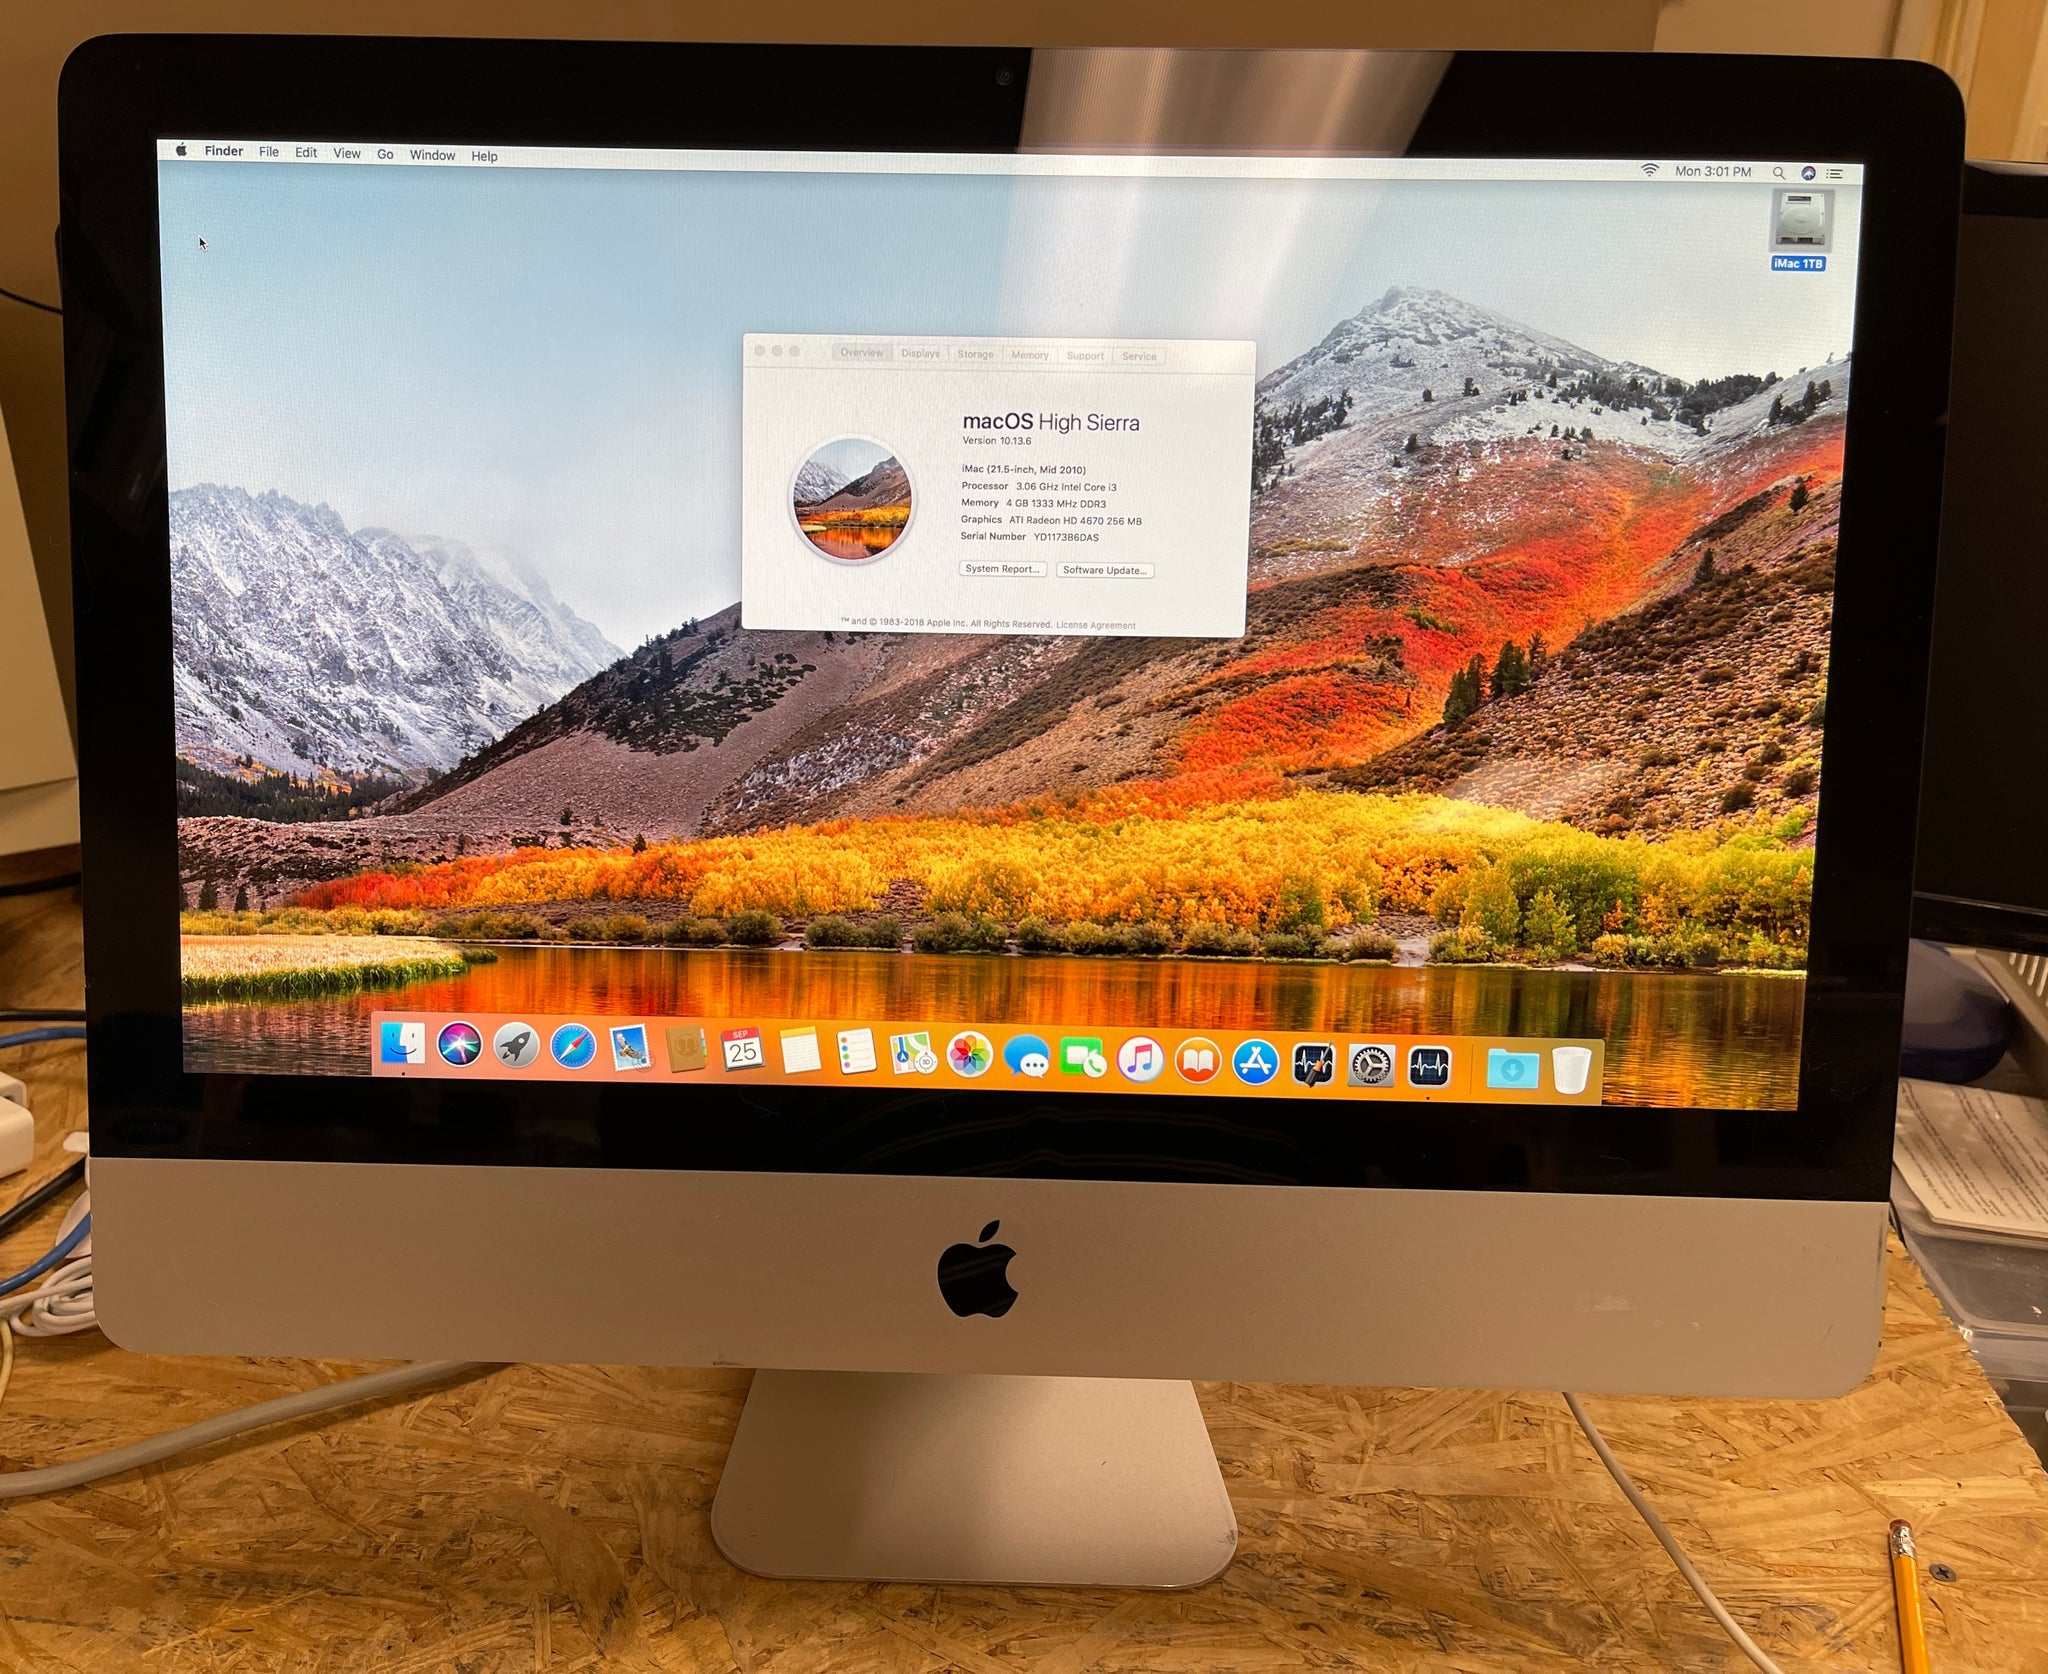 Apple iMac 21.5-inch Mid 2010 3.06GHz Intel Core i3 (MC508LL/A